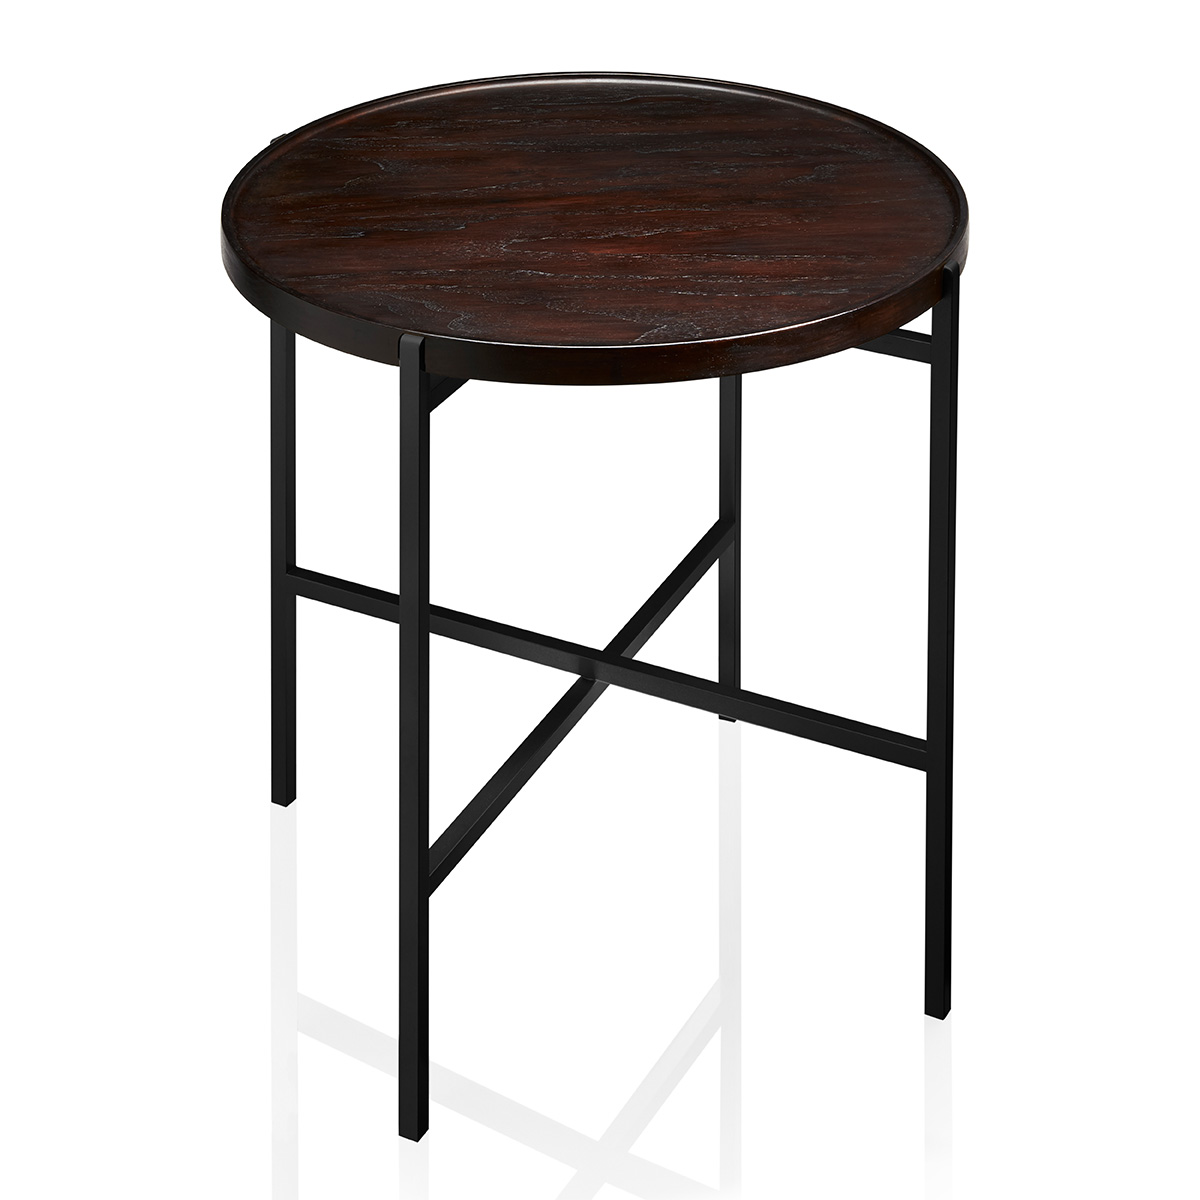 Table_BL_Black-Wood_1.jpg